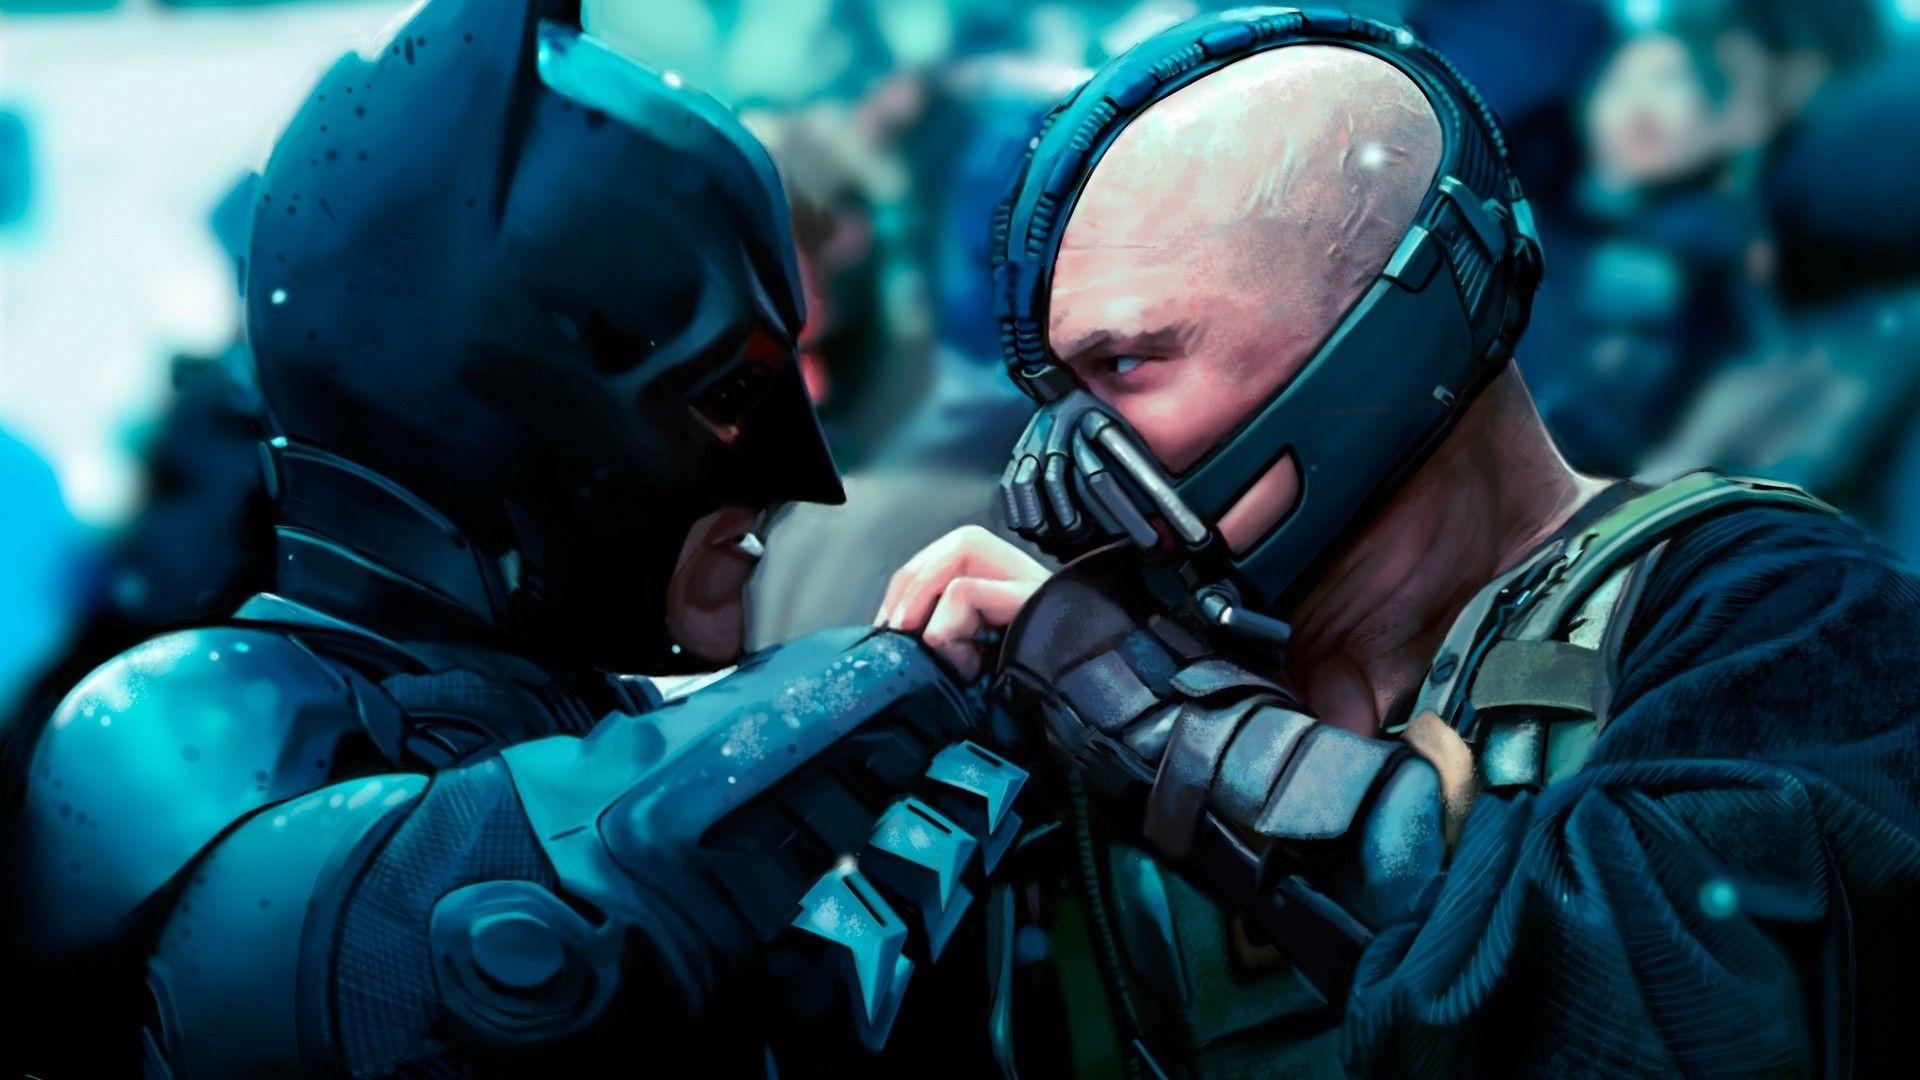 Bane vs. Batman Dark Knight Rises wallpaper